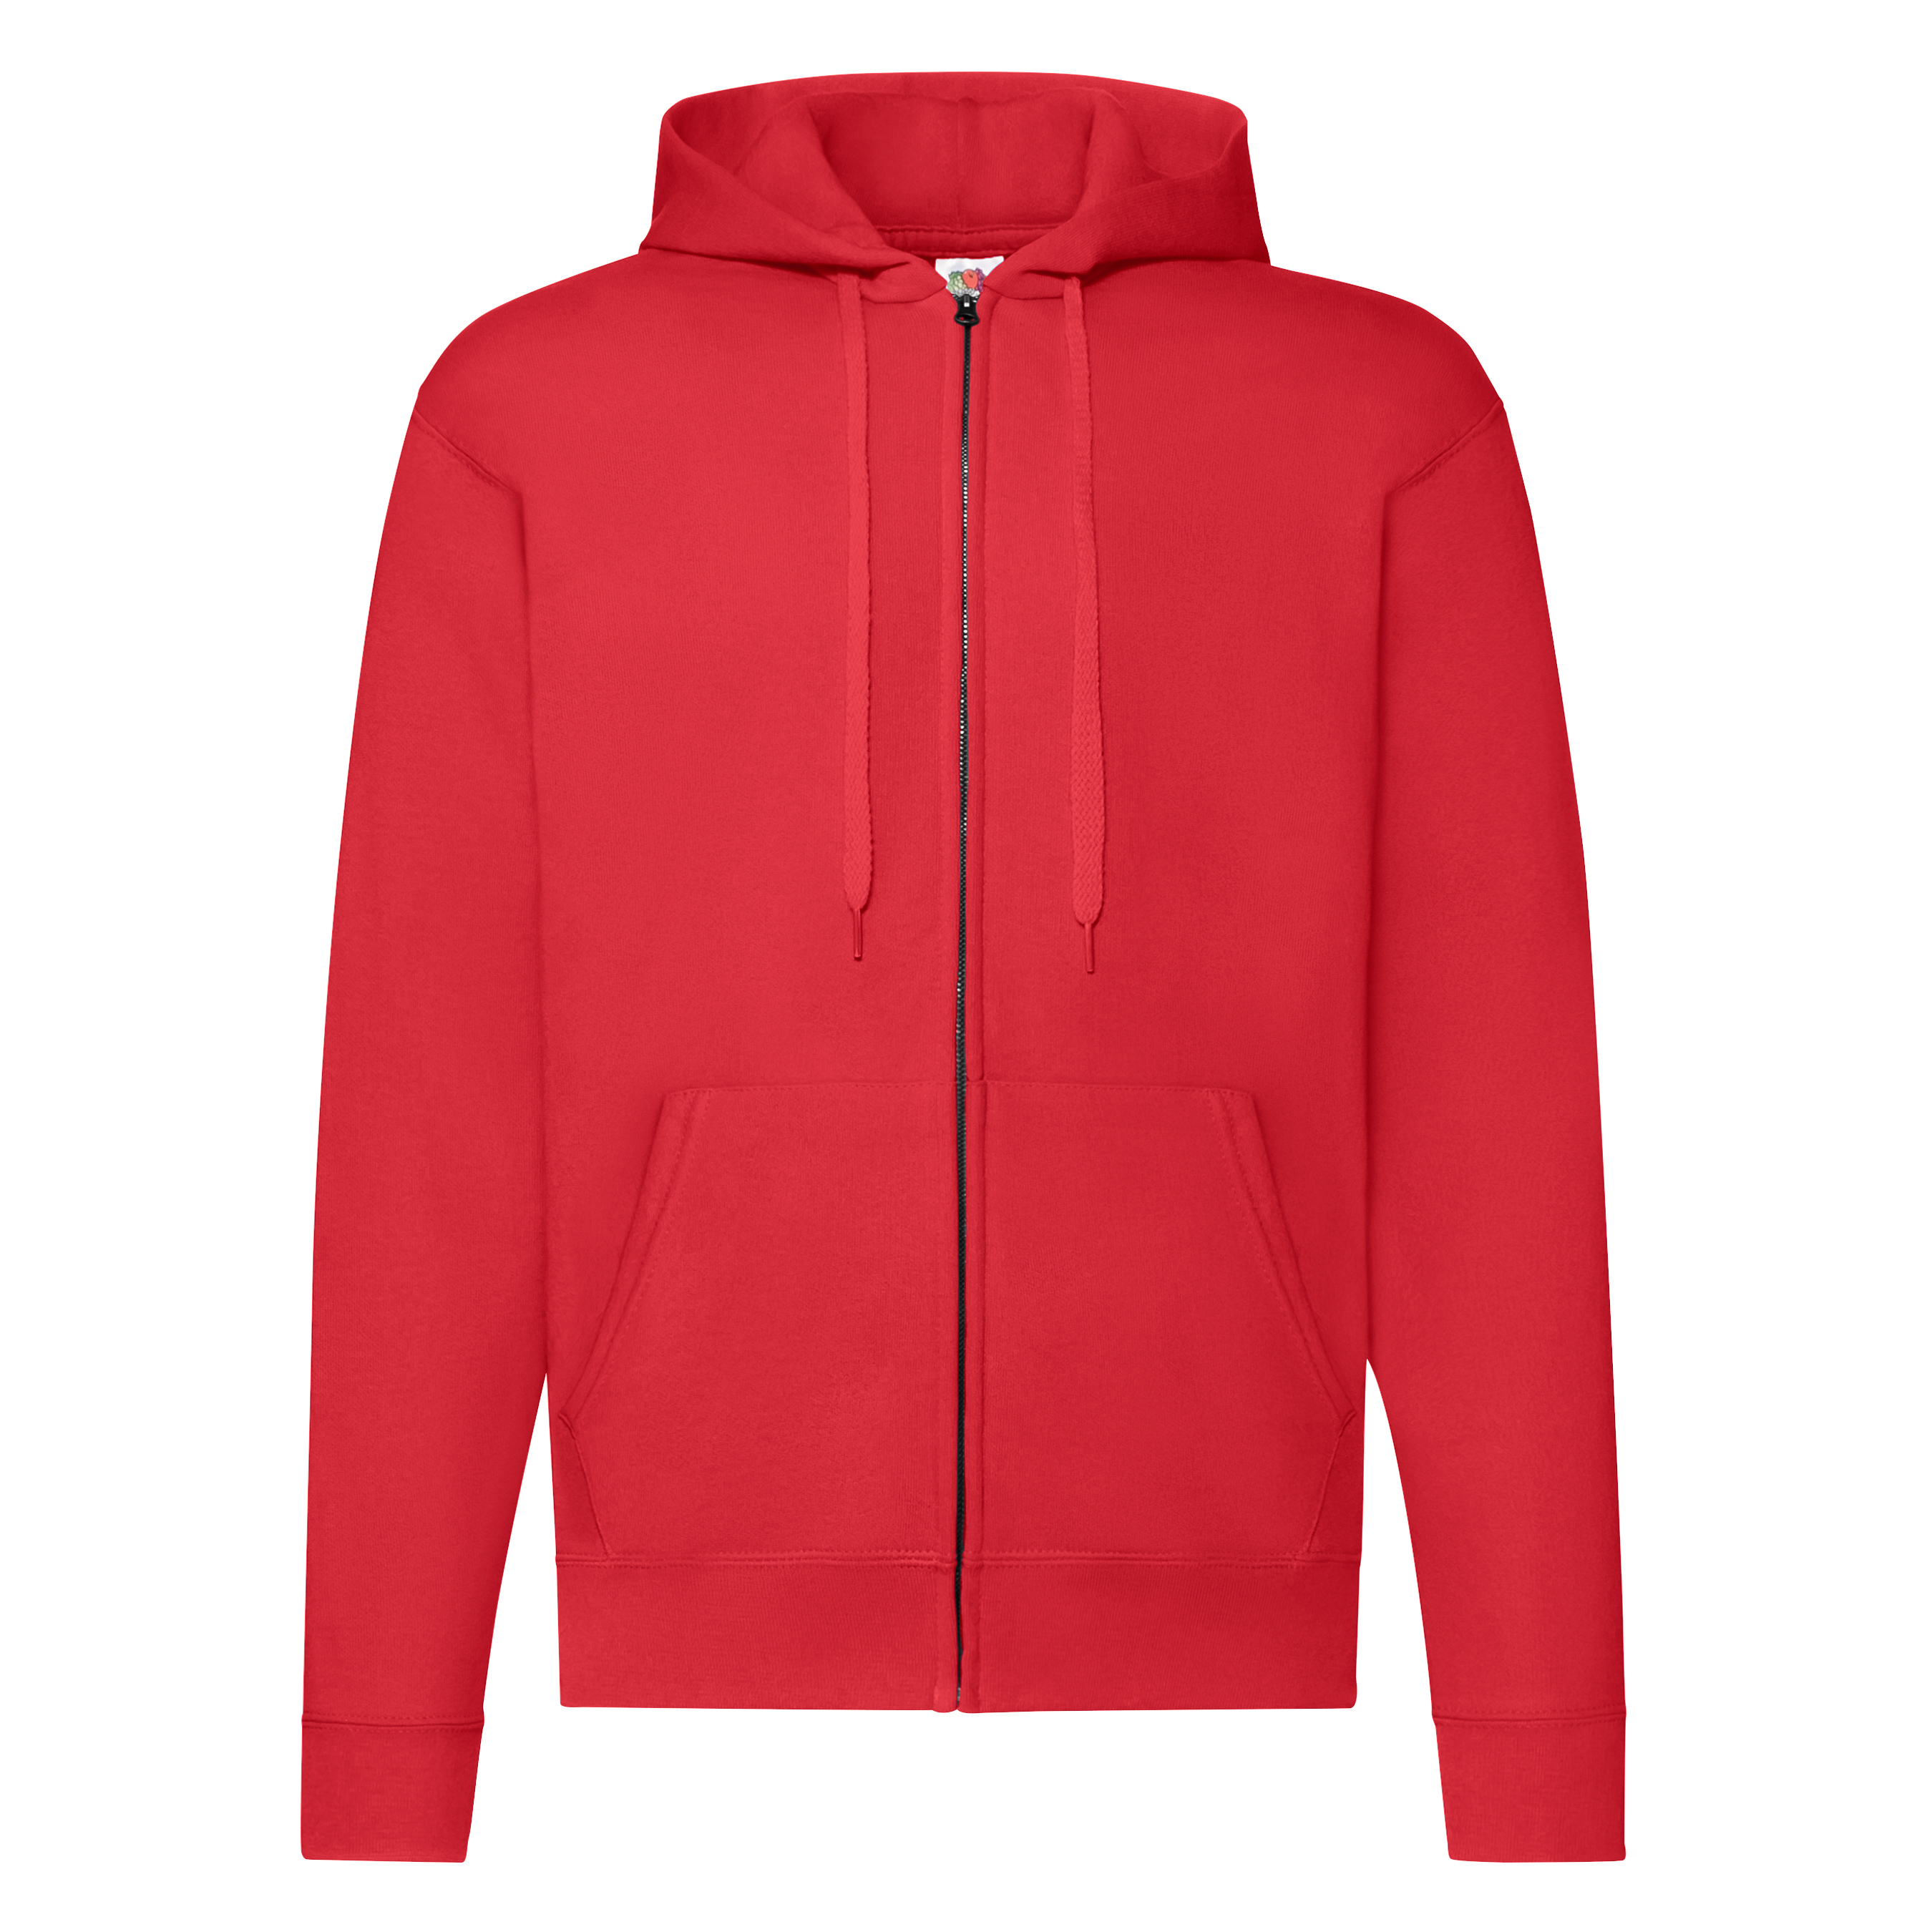 ax-httpswebsystems.s3.amazonaws.comtmp_for_downloadfruit-of-the-loom-classic-80-20-hooded-sweatshirt-jacket-red.jpg